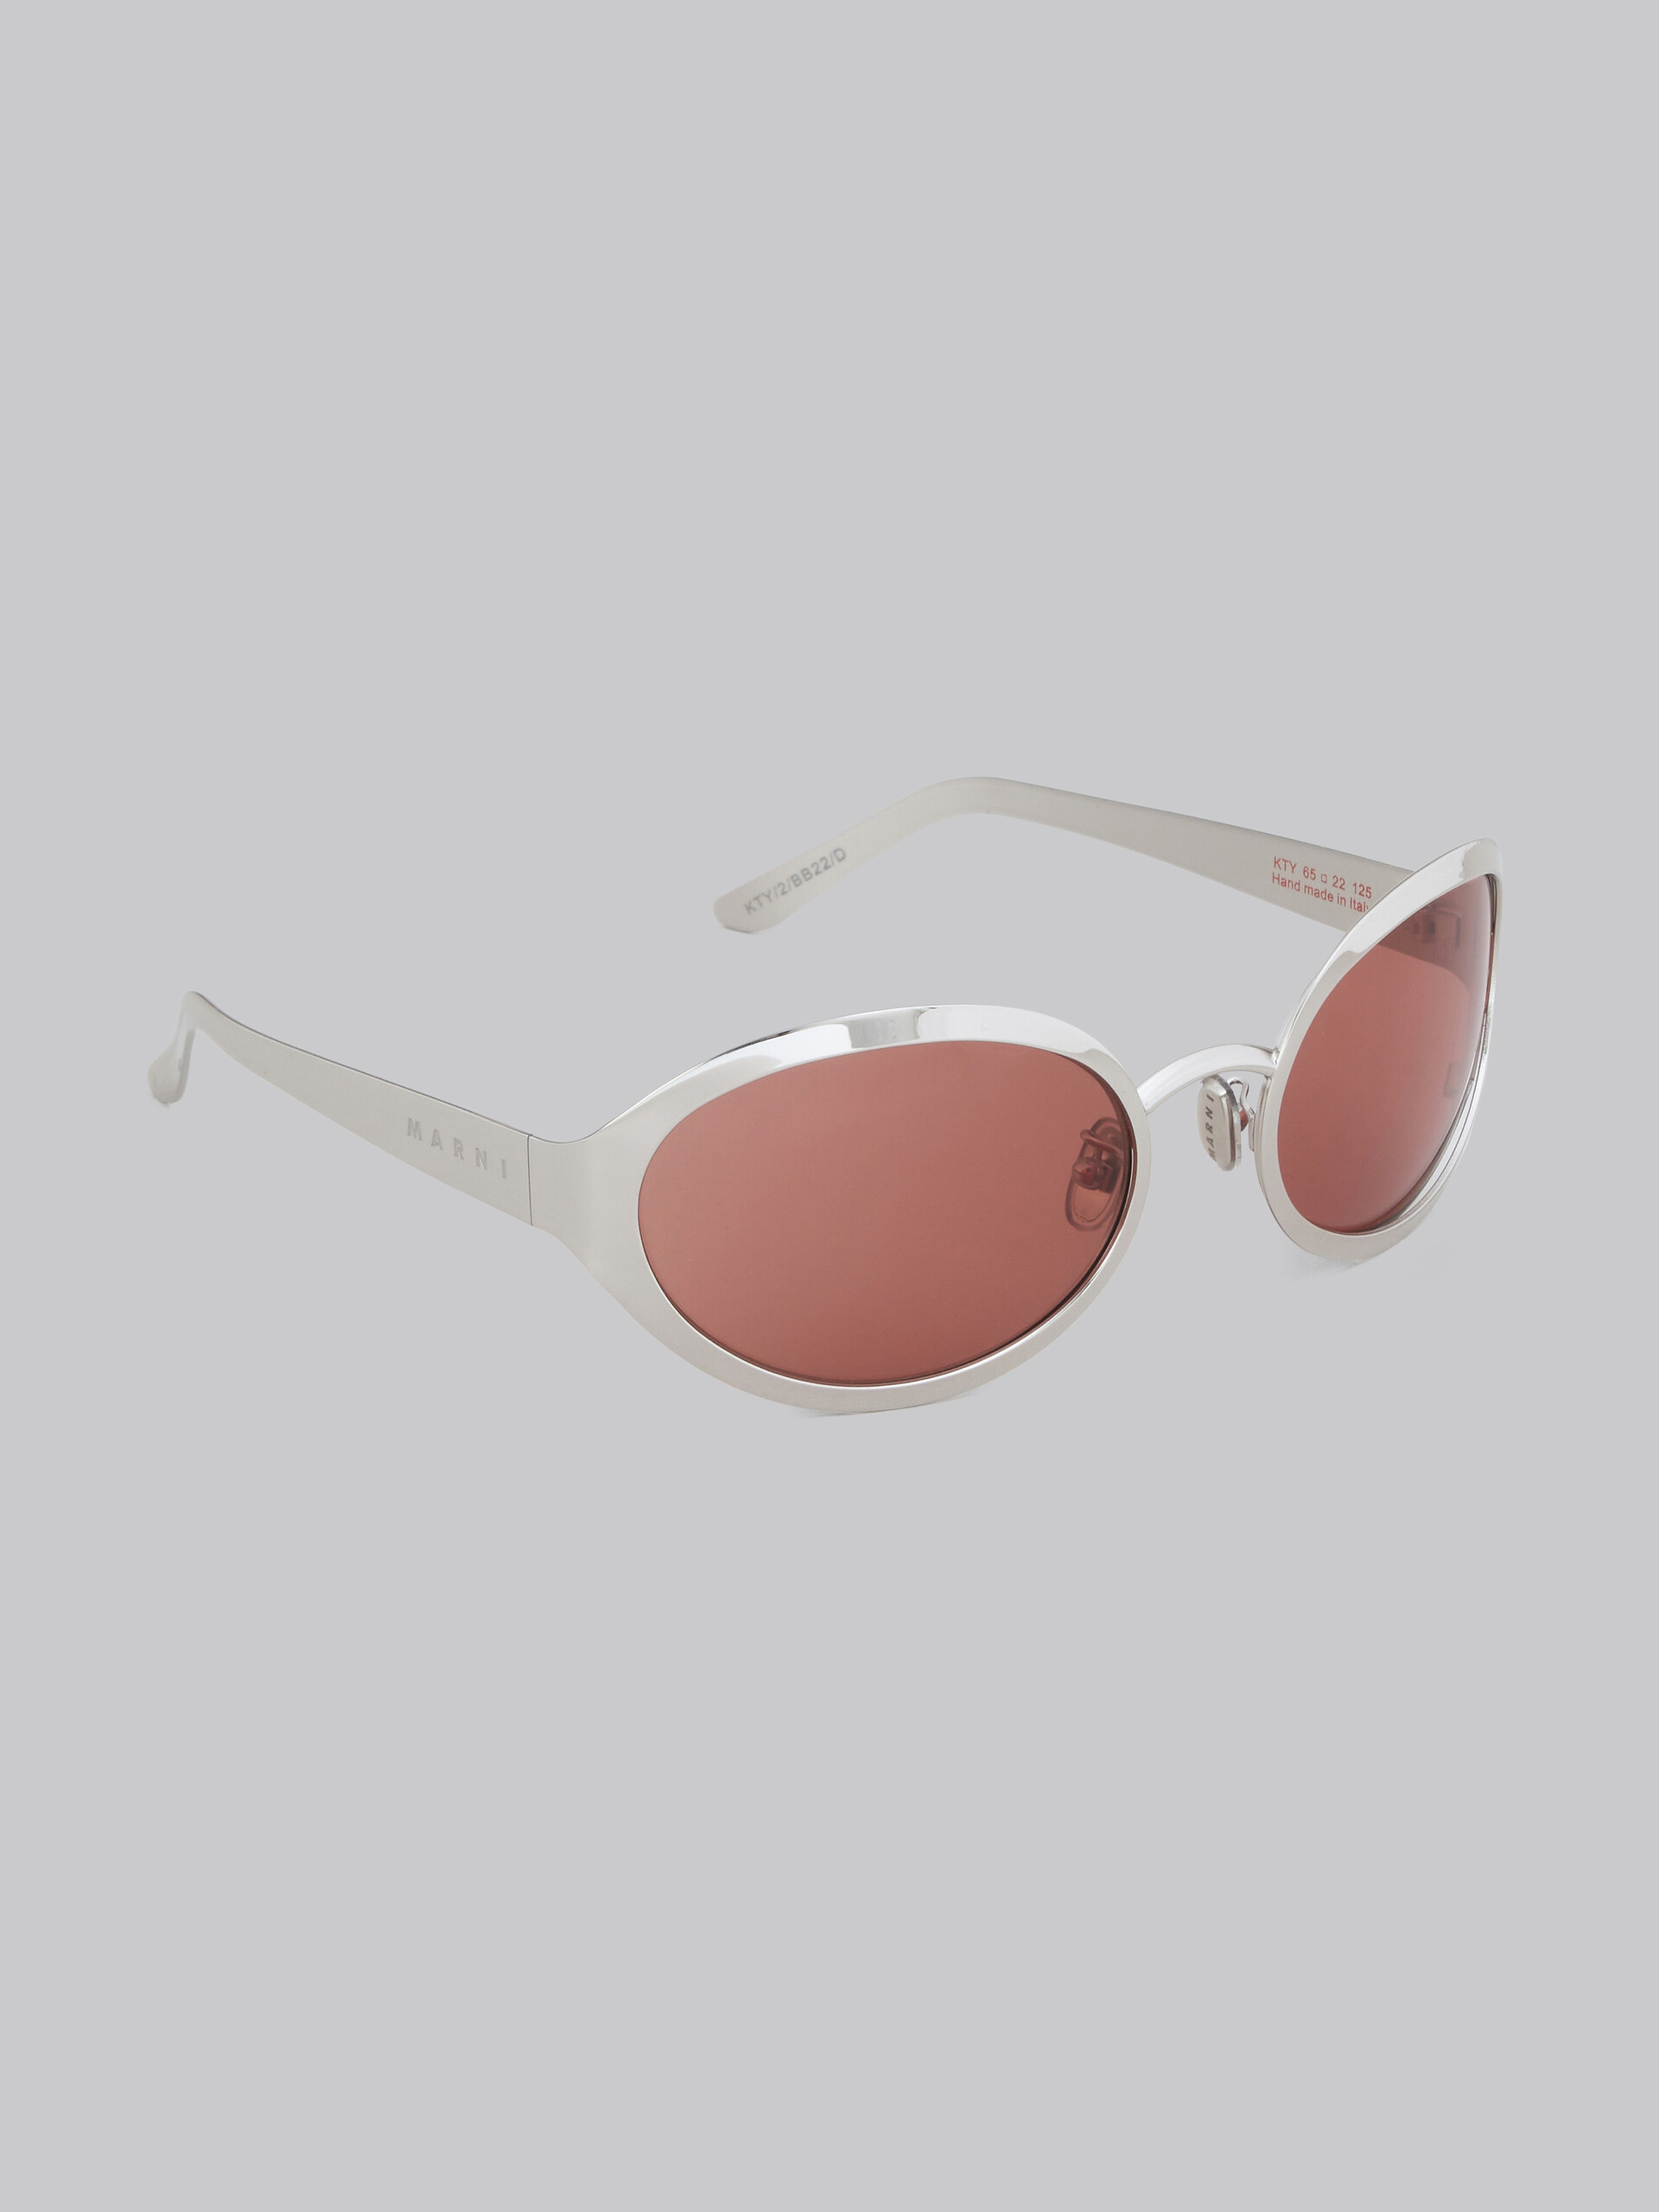 To-Sua green sunglasses - Optical - Image 3